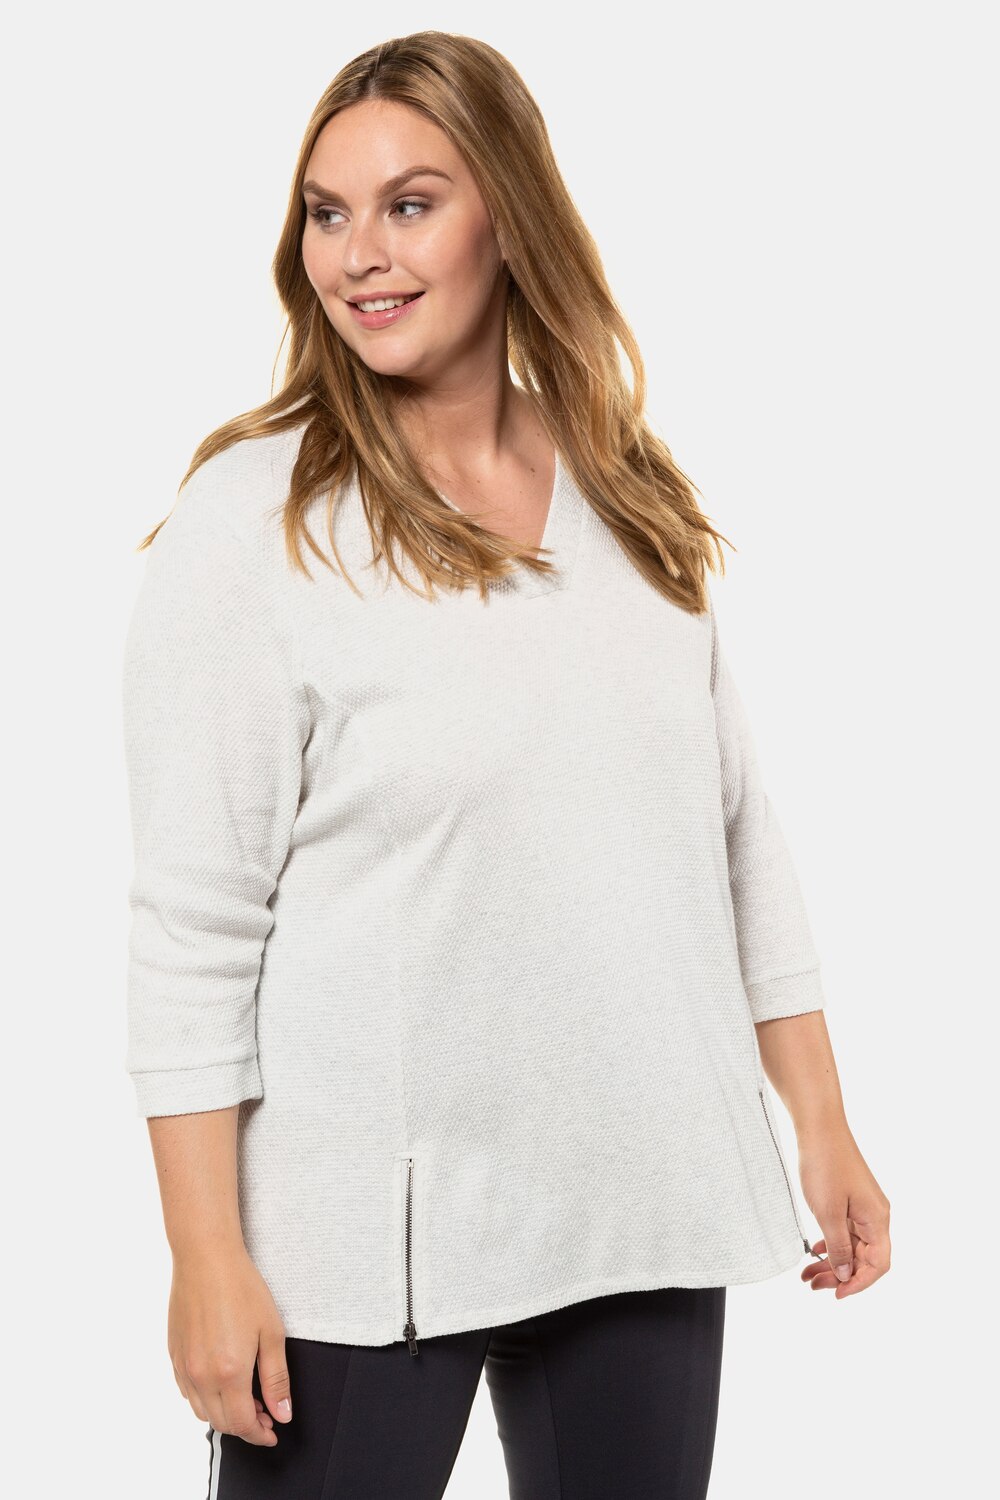 Plus Size Zipper Hem V-Neck Textured Sweatshirt, Woman, grey, size: 28/30, cotton/polyester, Ulla Popken